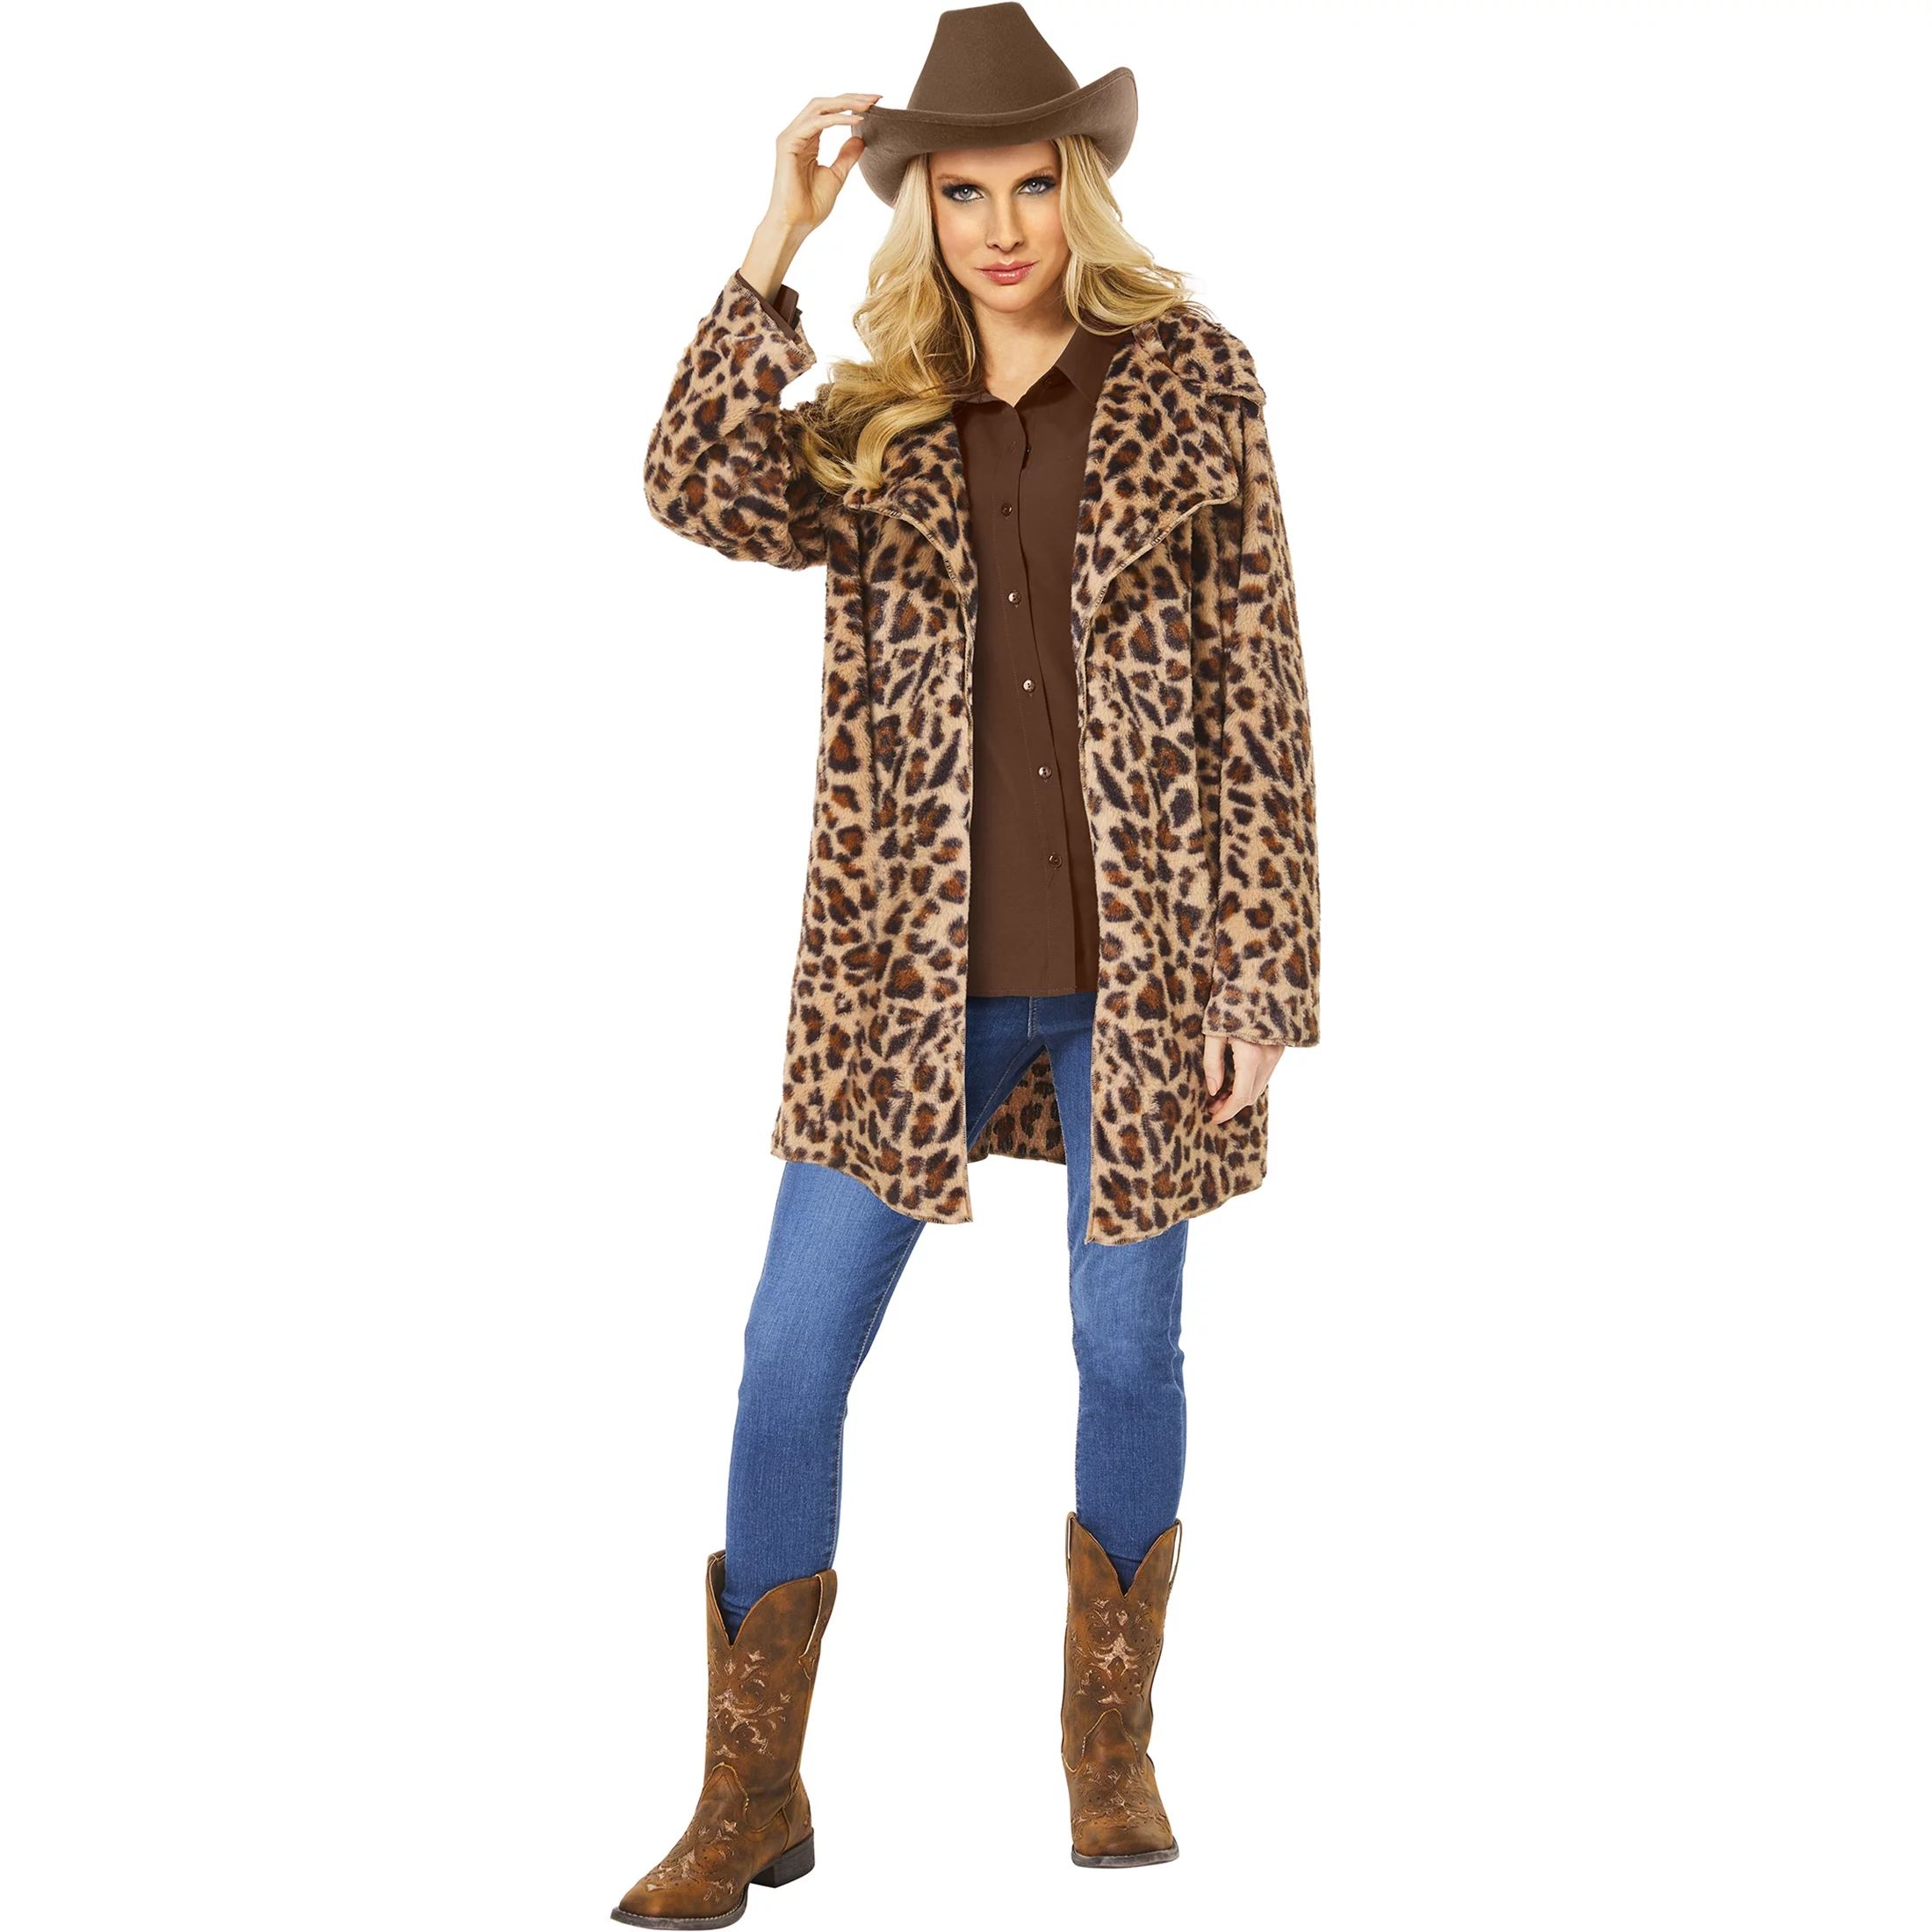 InSpirit Designs Yellowstone Beth Dutton Halloween Costume Female, Adult 18-64, Multi-Color | Walmart (US)